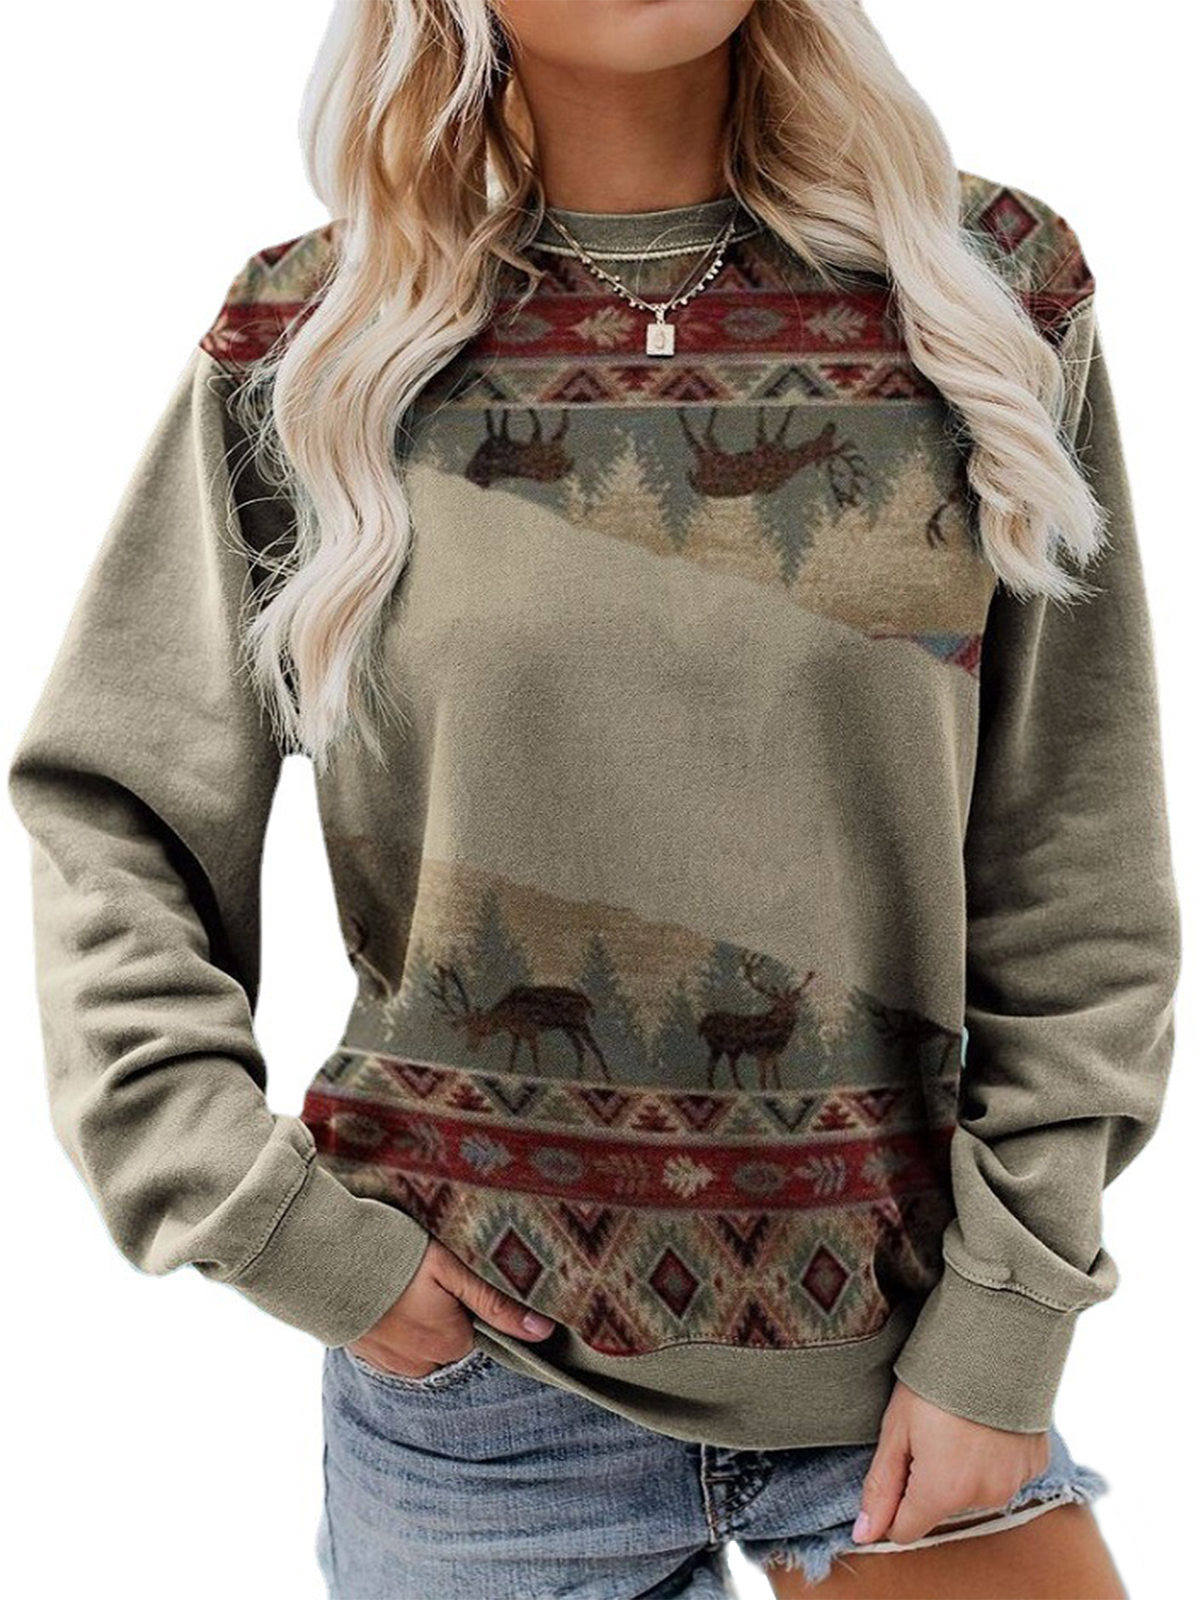 Women's Retro Western Ethnic Chic Printed Sweater